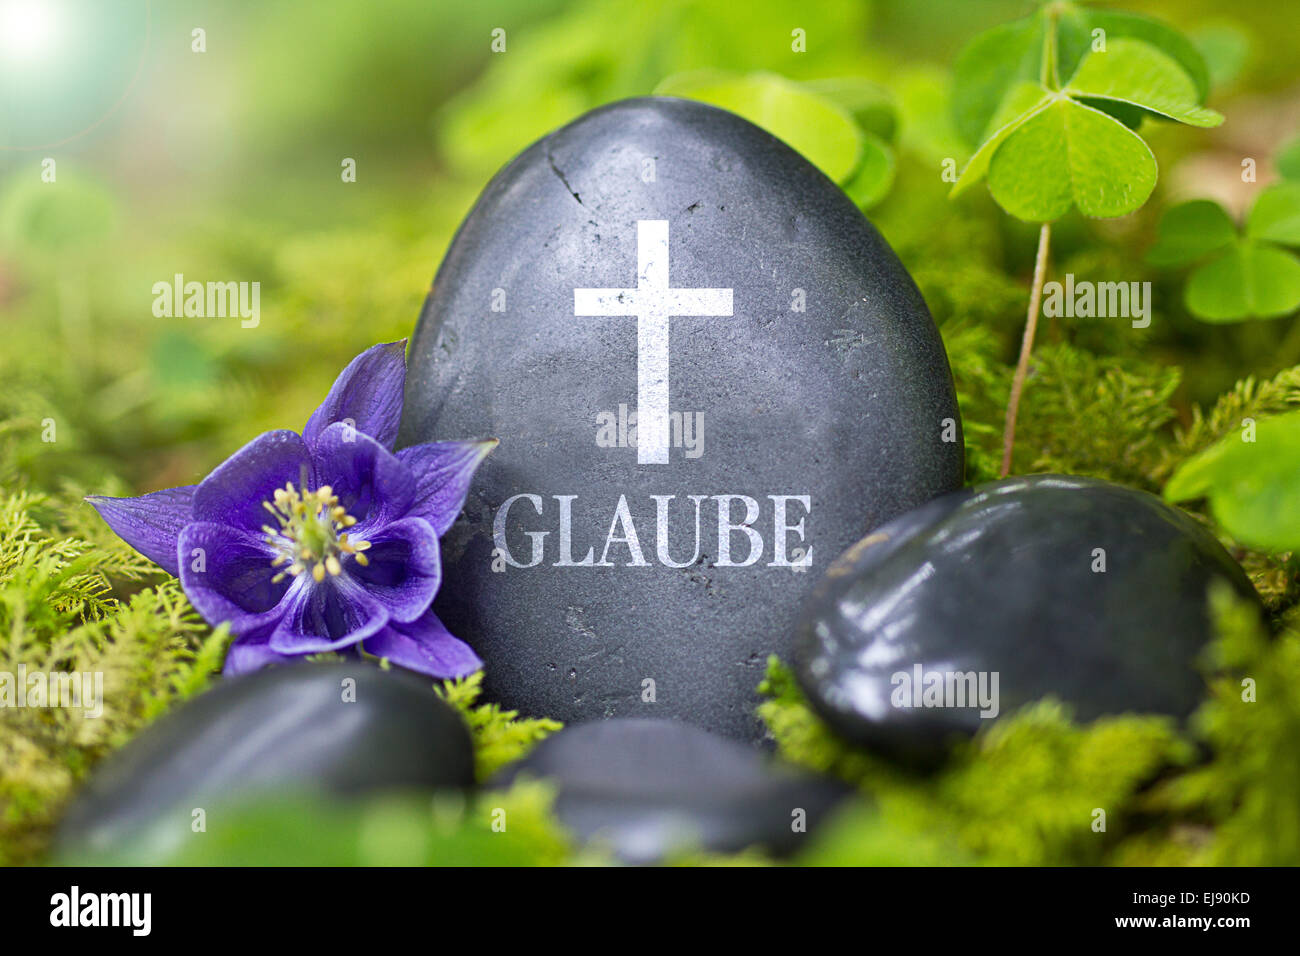 Piedra negra con la palabra "Glaube" Foto de stock